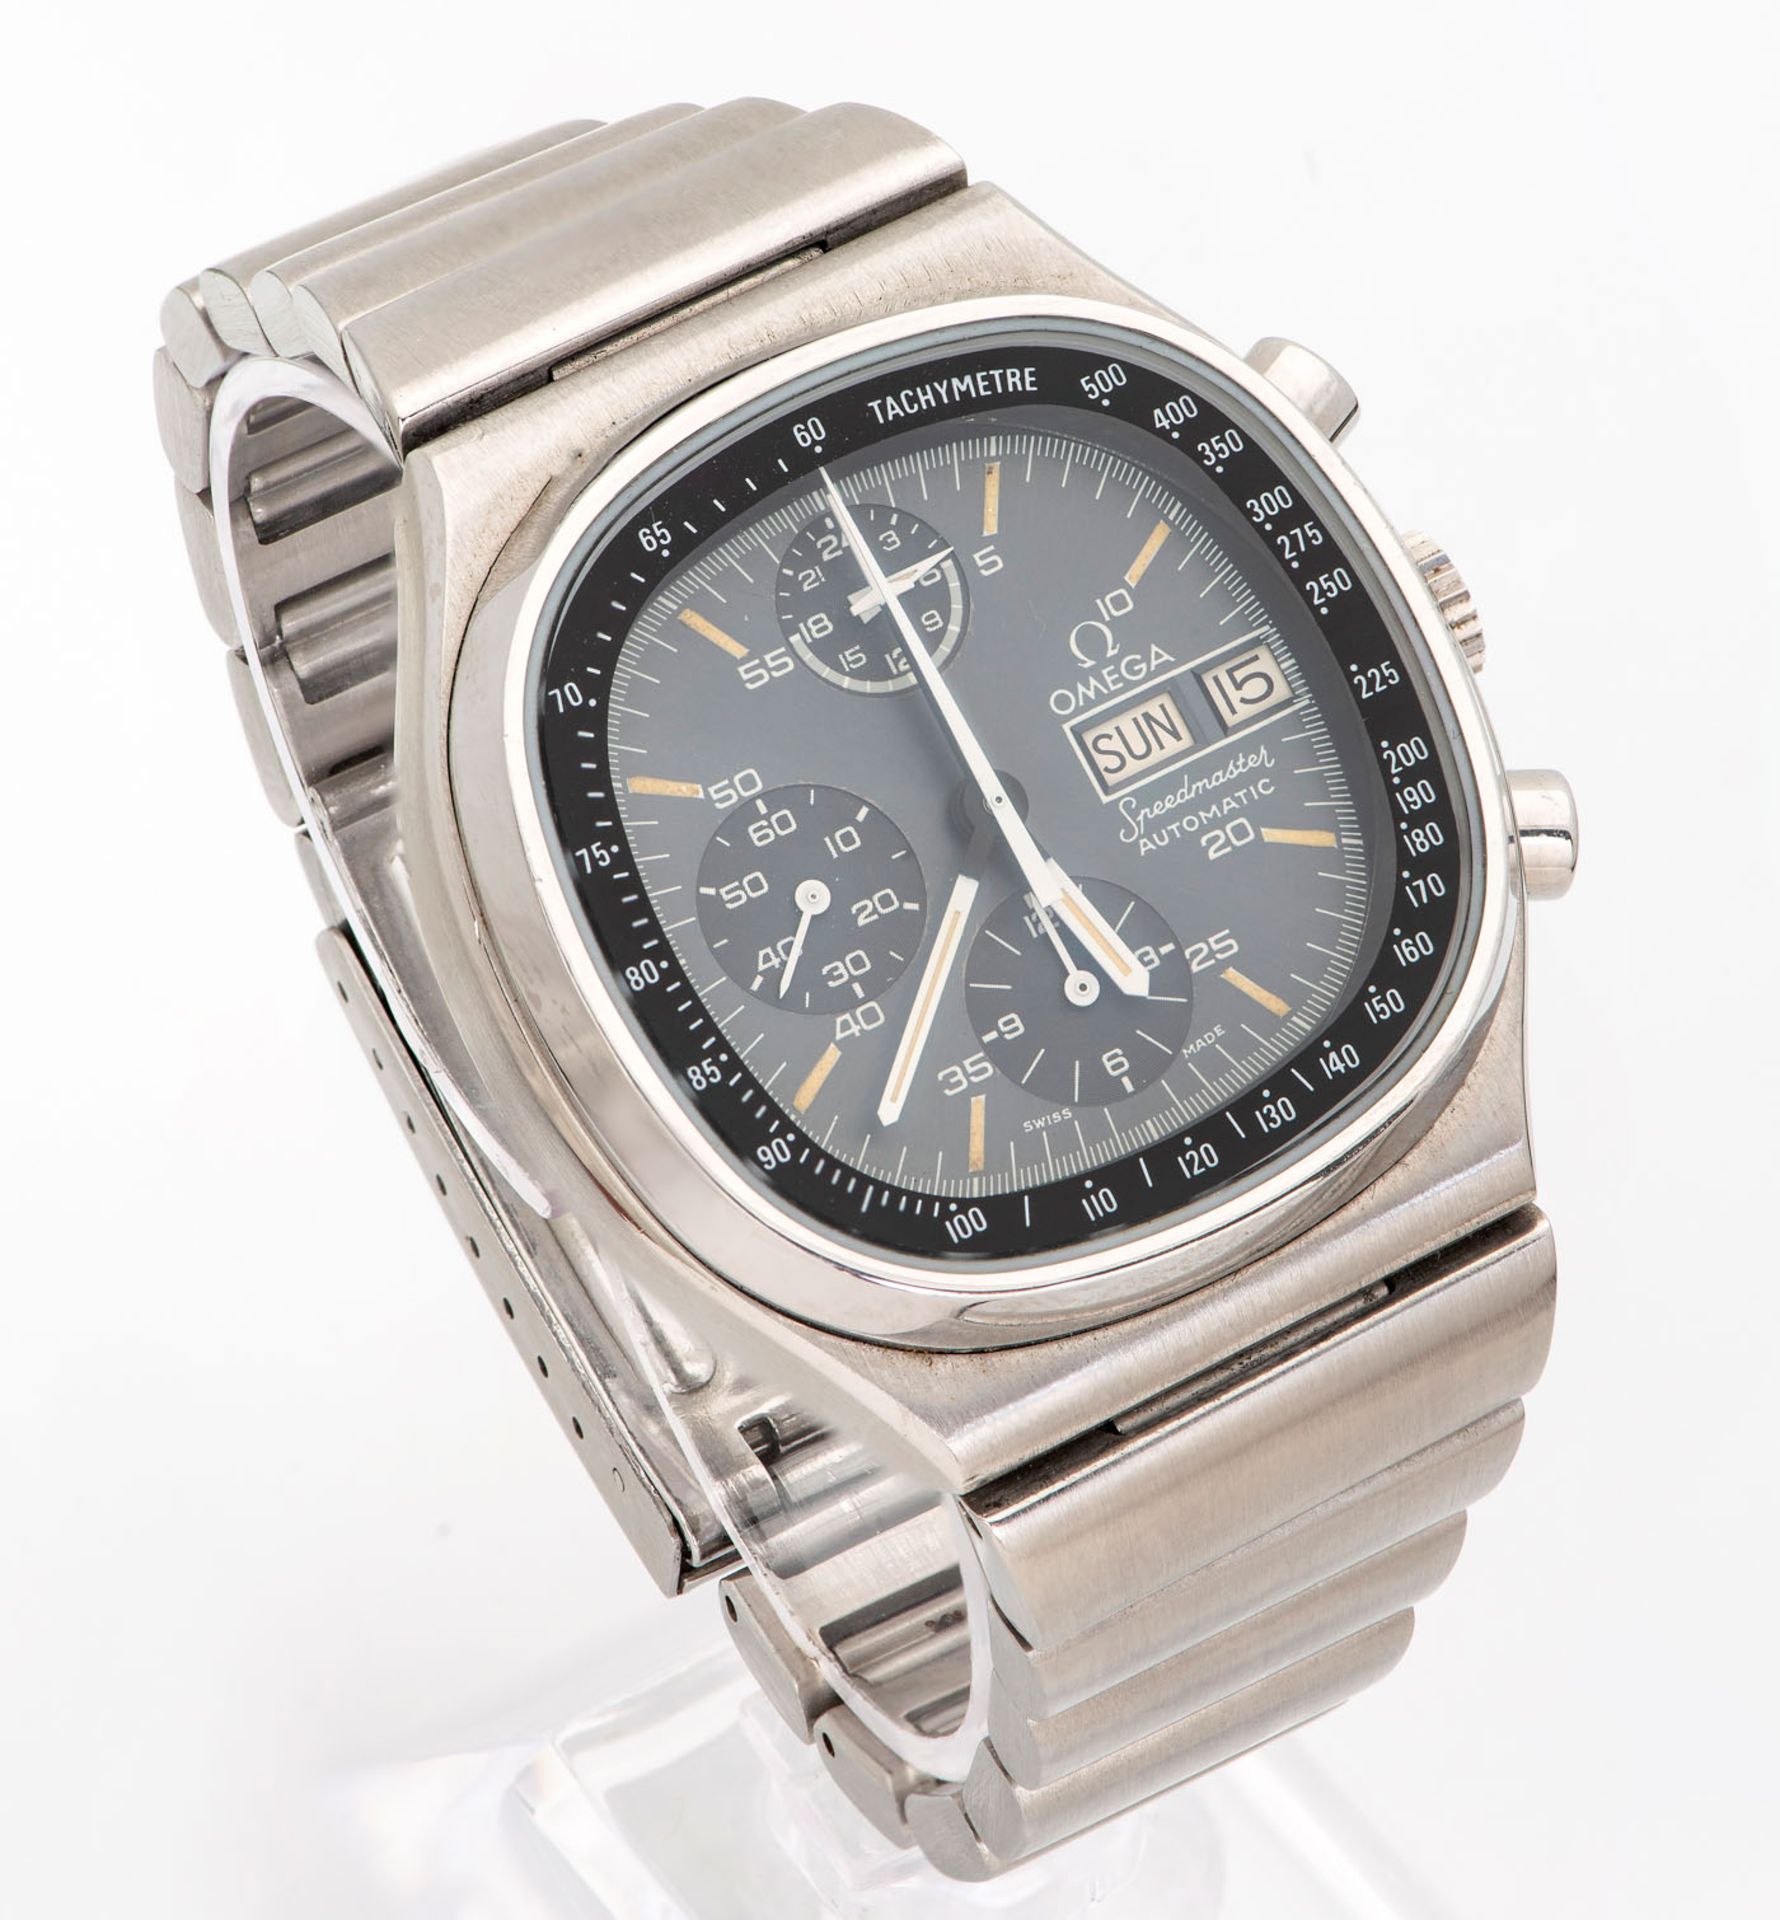 An Omega Stainless Steel Speedmaster Automatic Calendar Chronograph Wristwatch